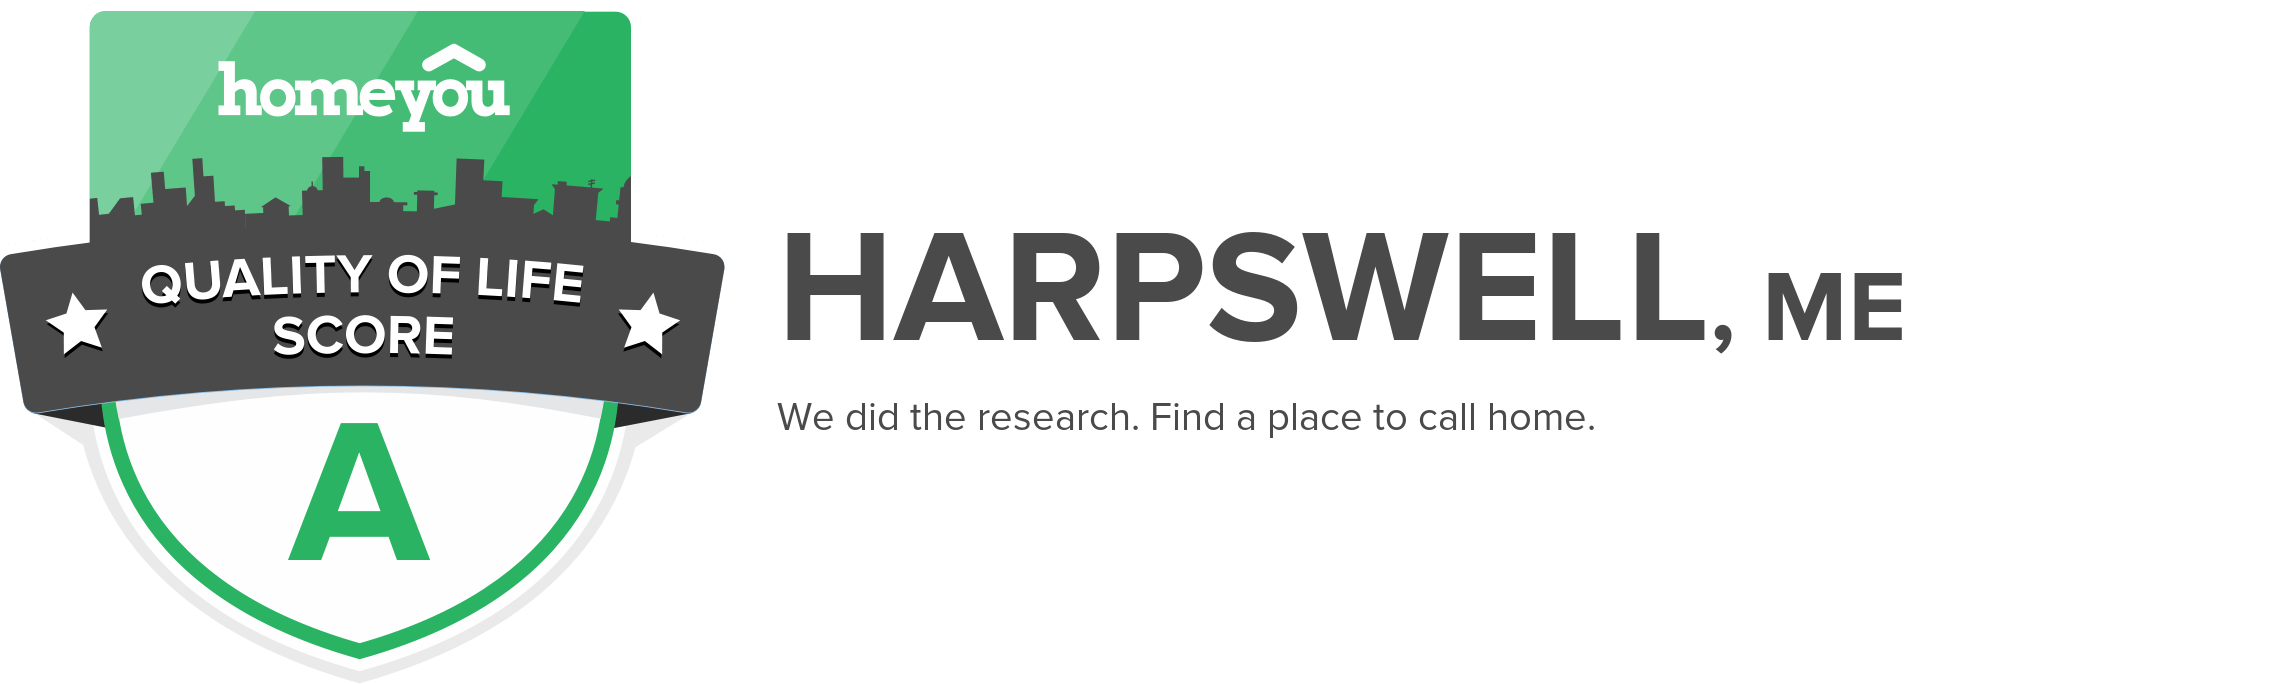 Harpswell, ME